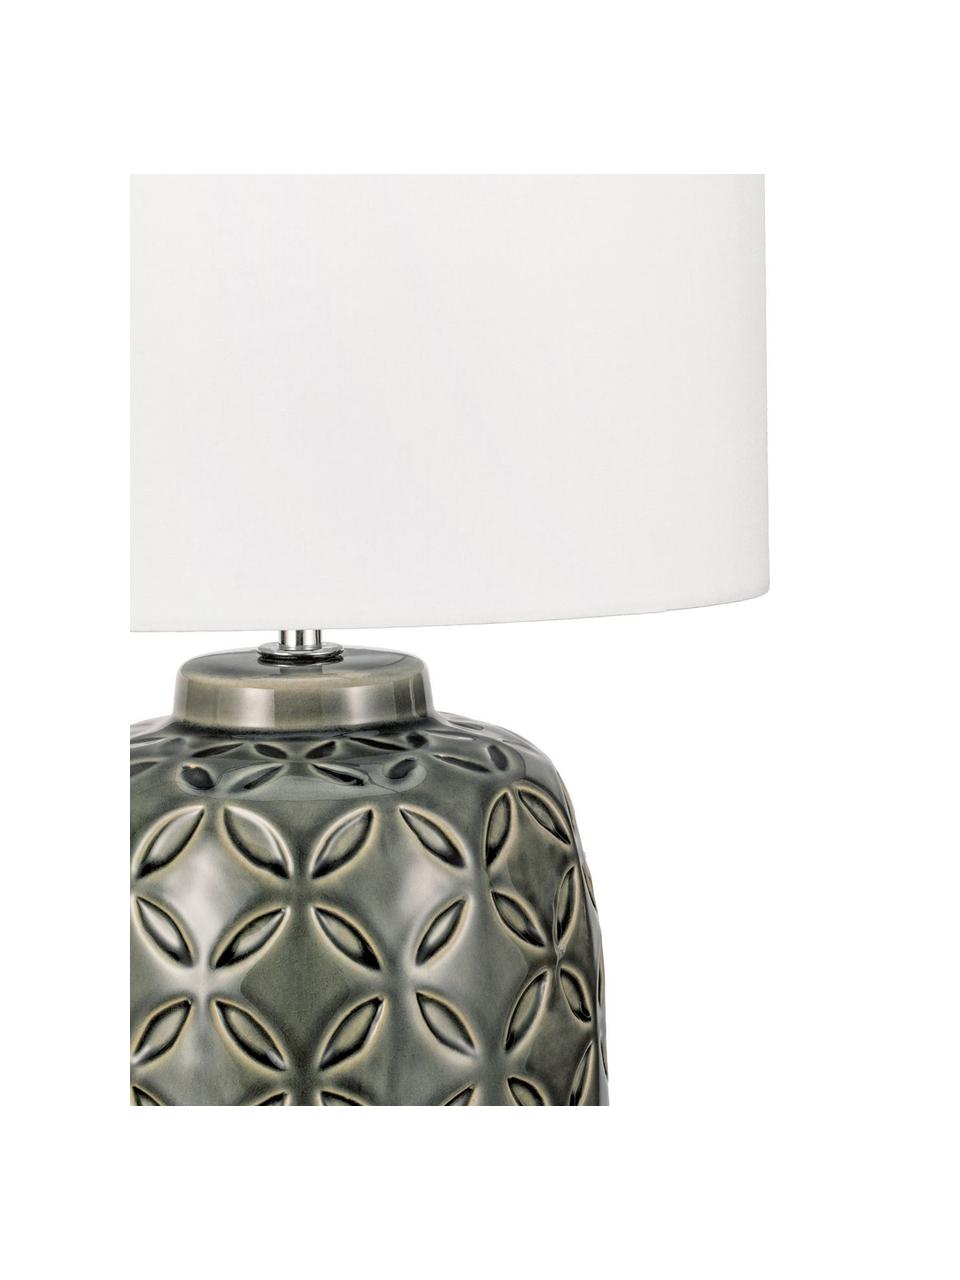 Keramik-Tischlampe Glowing Bloom, Lampenschirm: Stoff, Lampenfuß: Keramik, Grau, Weiß, Ø 25 x H 40 cm